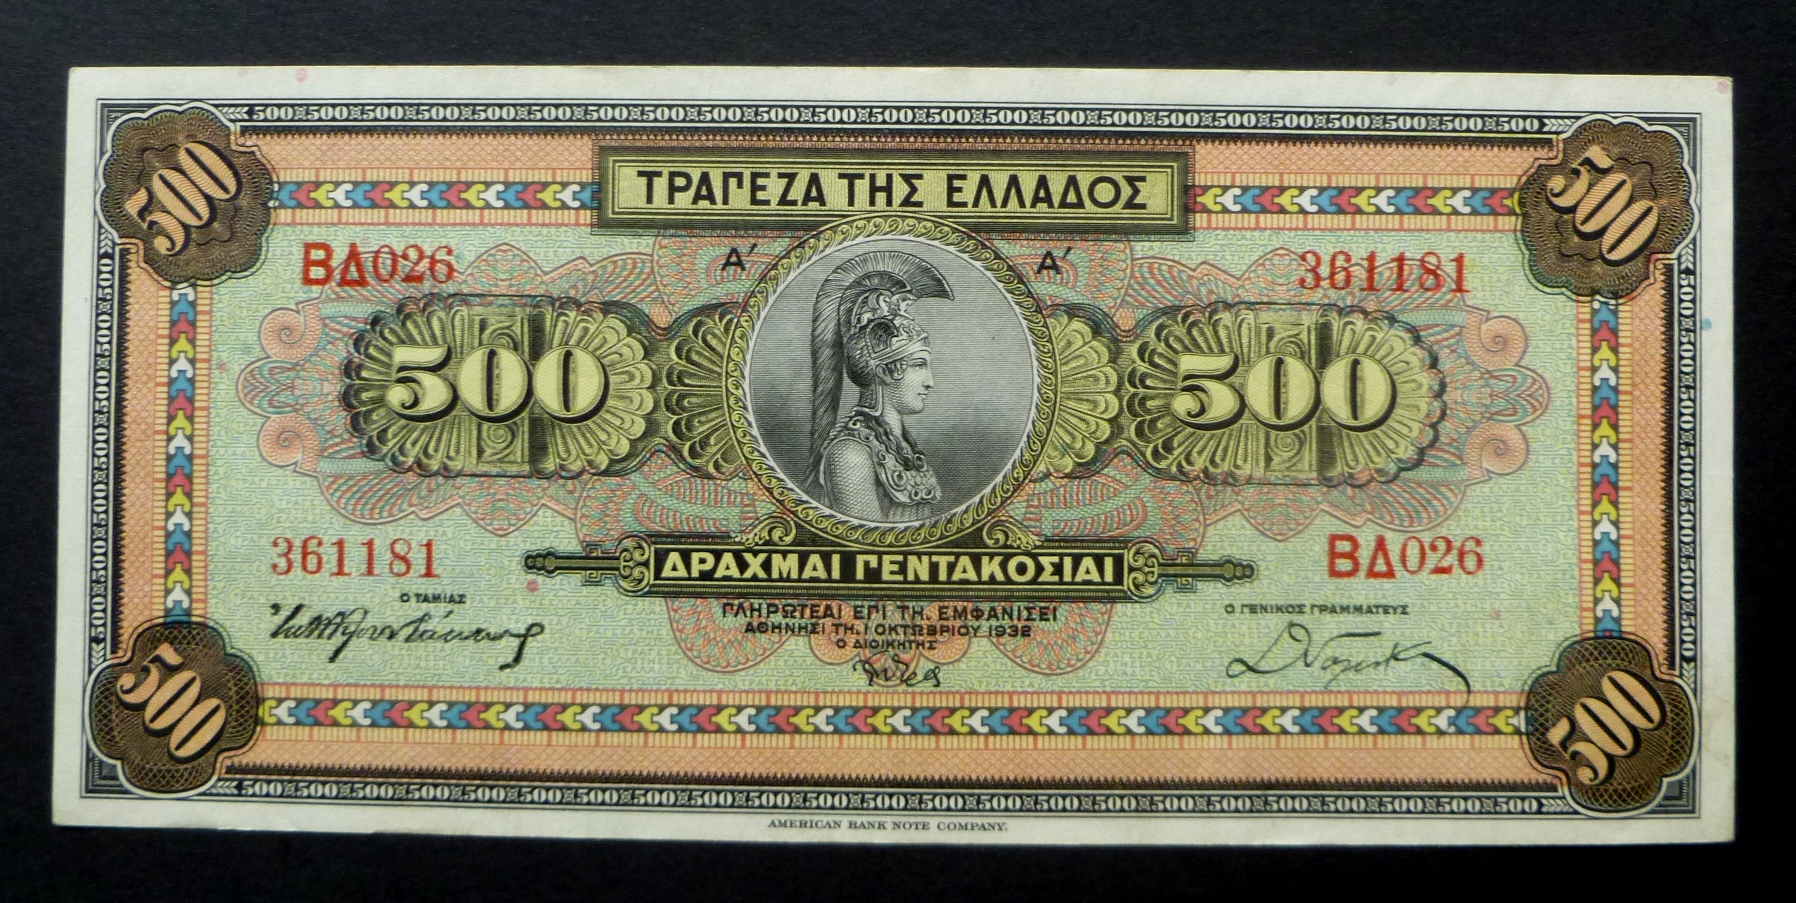 Greece eBay Aug 2014 2014-08-26 009.JPG